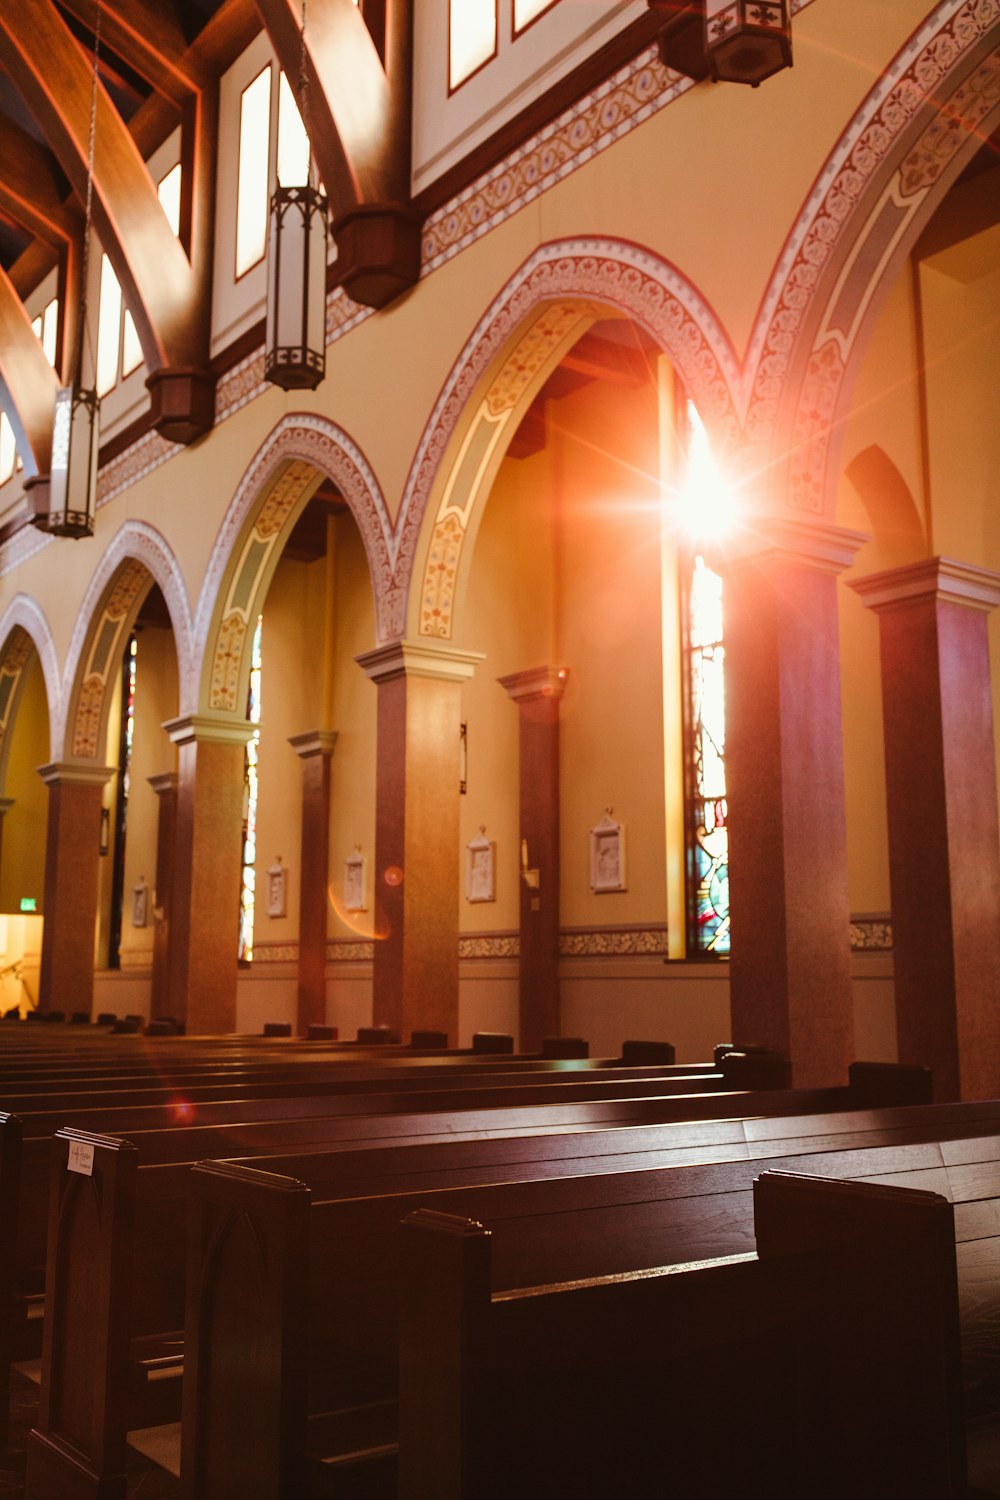 the sunlight shines through the windows of a church